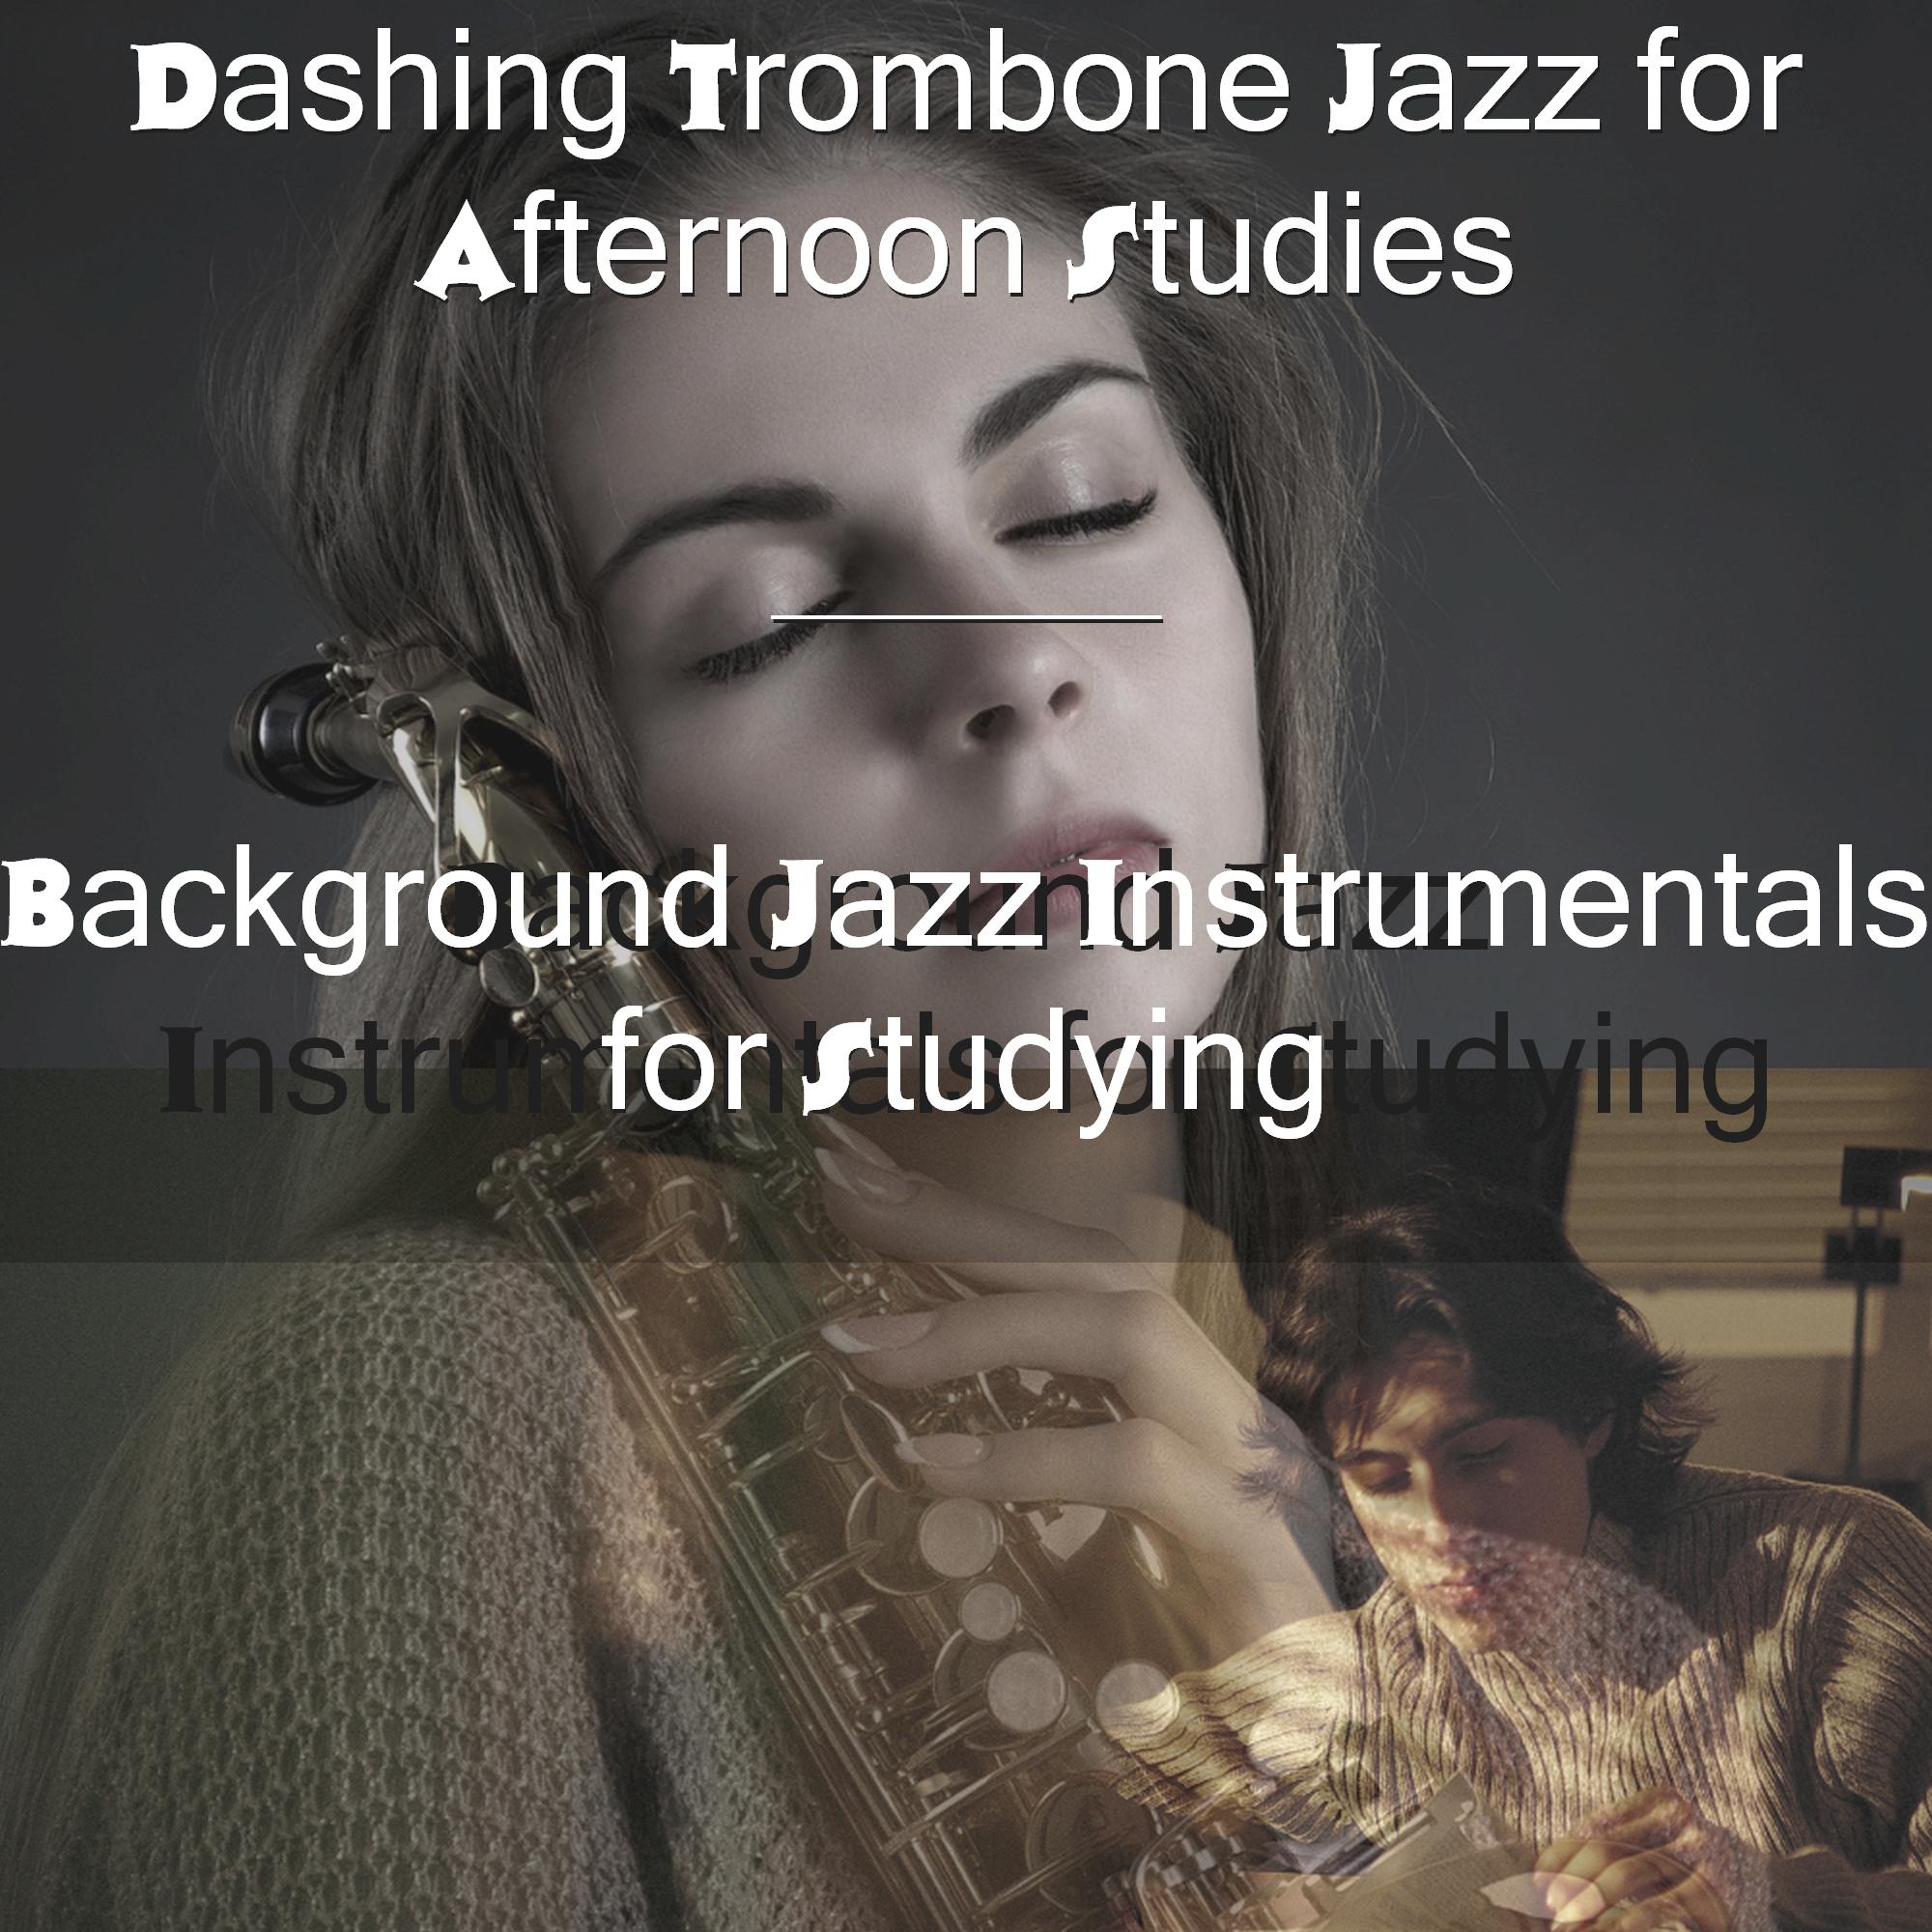 Meditative Trombone Jazz for Afternoon Studies